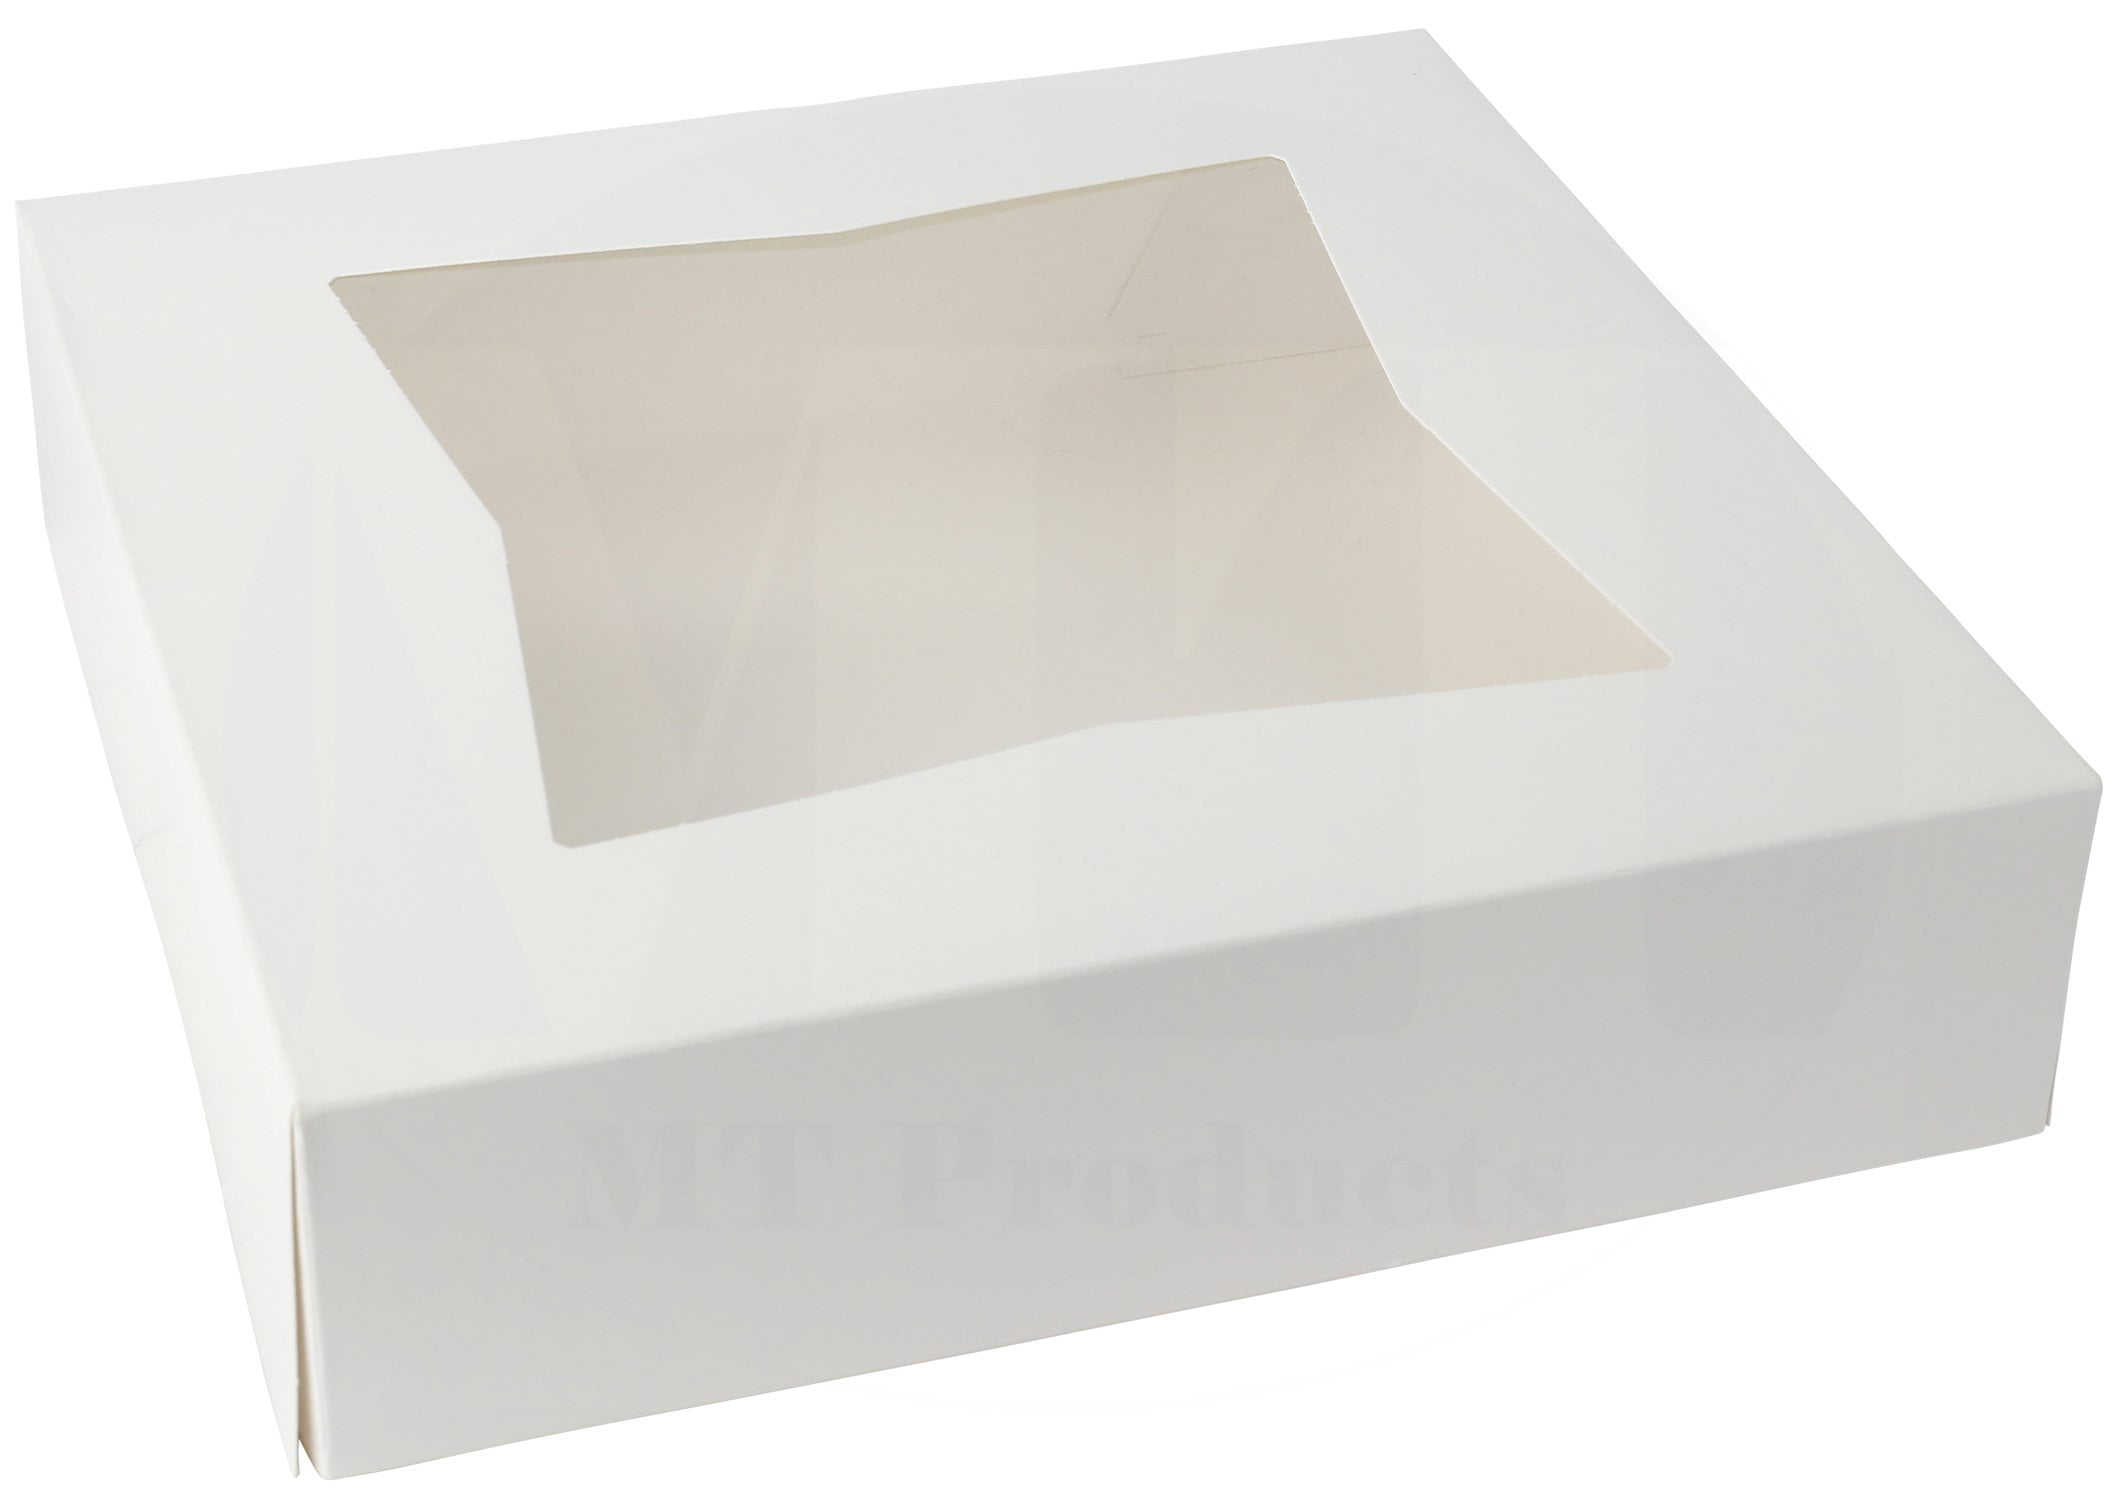 Pie Bakery Box 8" x 8" x 2 1/2" White Auto-Popup with a Window 10 Pieces 